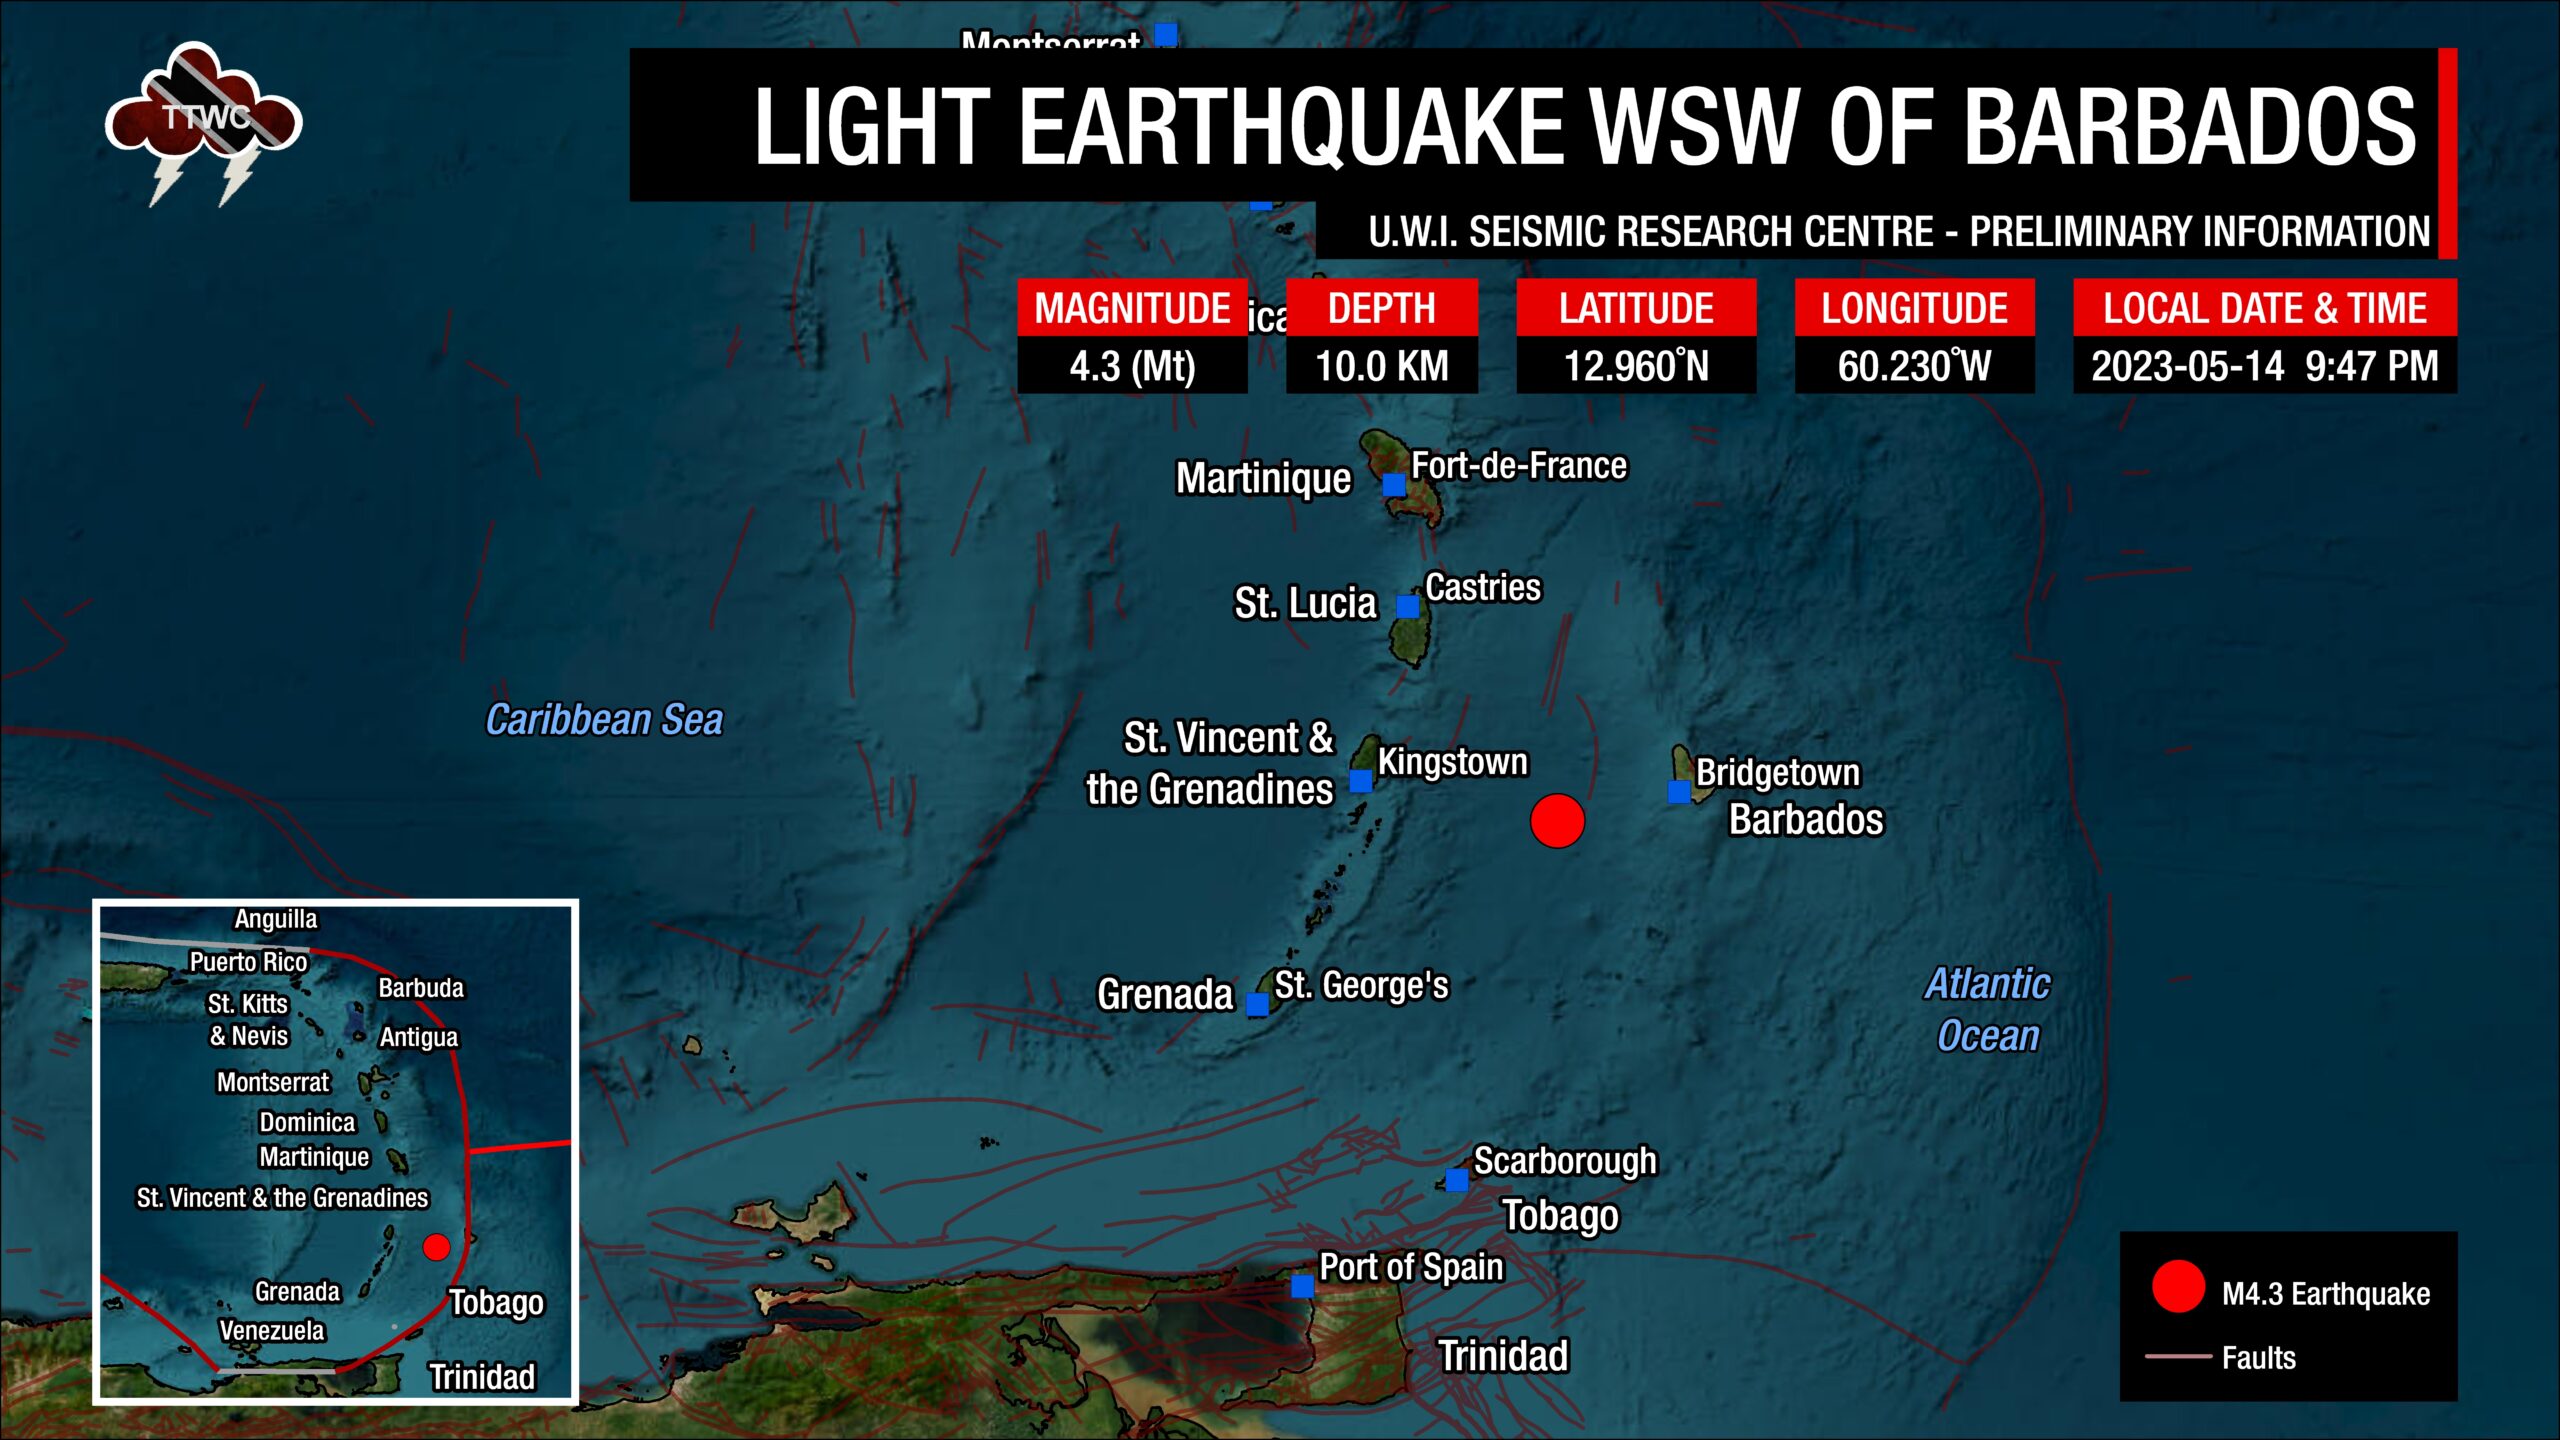 947 PM Light M4.3 Earthquake Strikes WSW of Barbados Trinidad and Tobago Weather Center